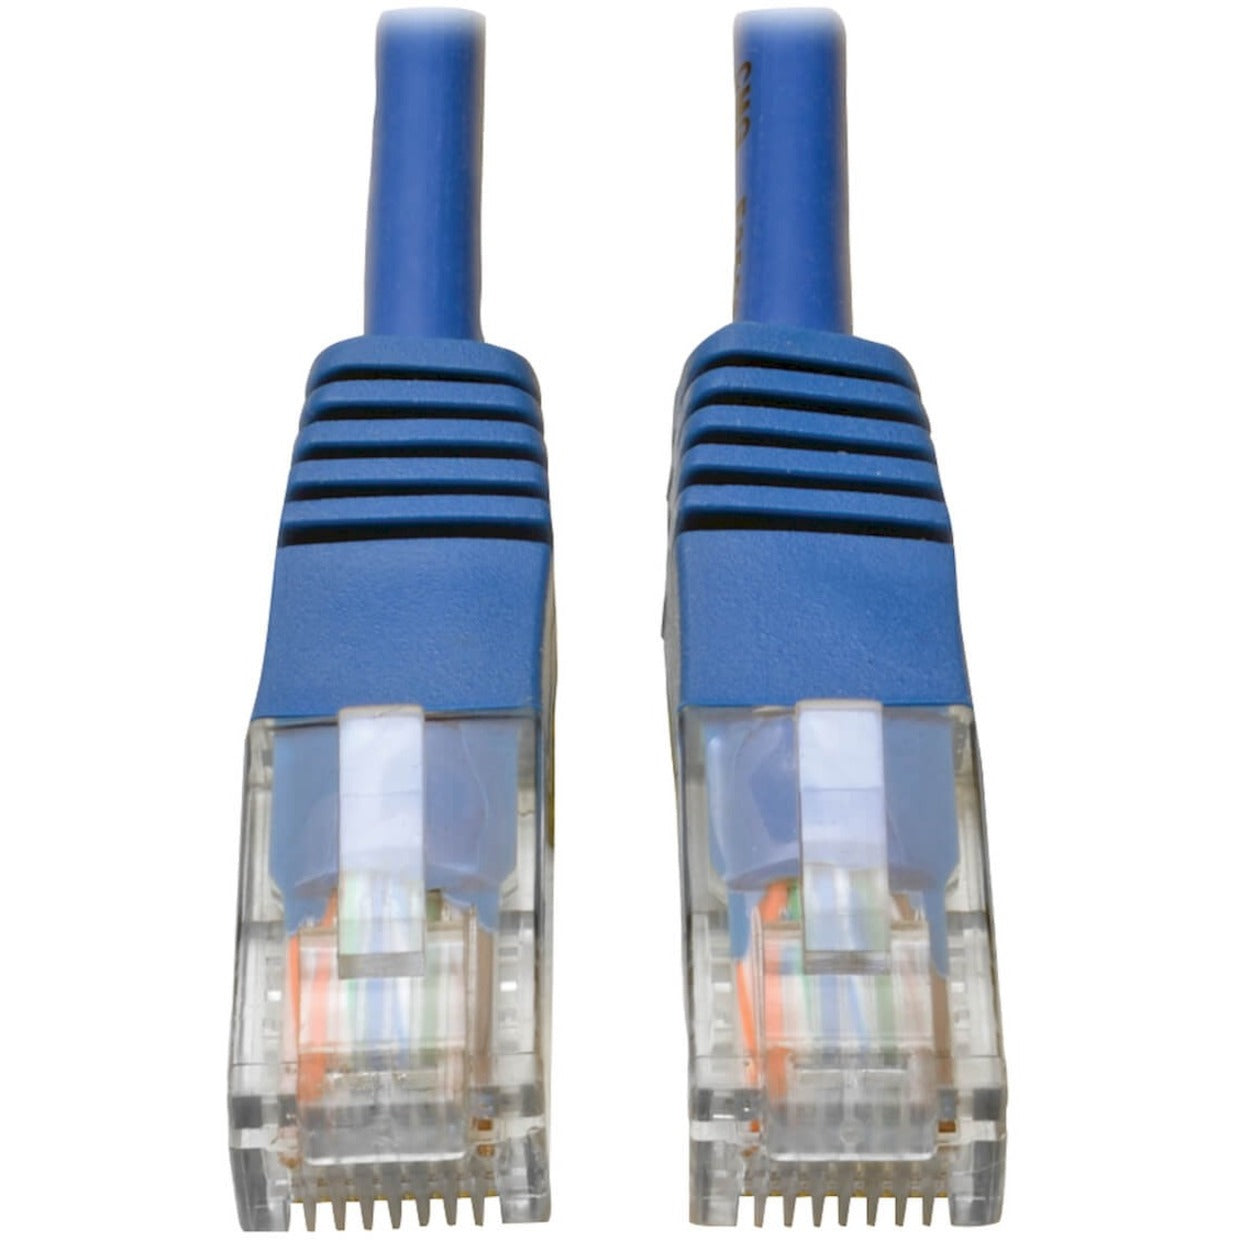 Tripp Lite N002-030-BL 30英尺 Cat5e 350MHz 成型电缆（RJ45 M/M）- 蓝色 终身保修 RoHS 认证 Tripp Lite = 翠普利特